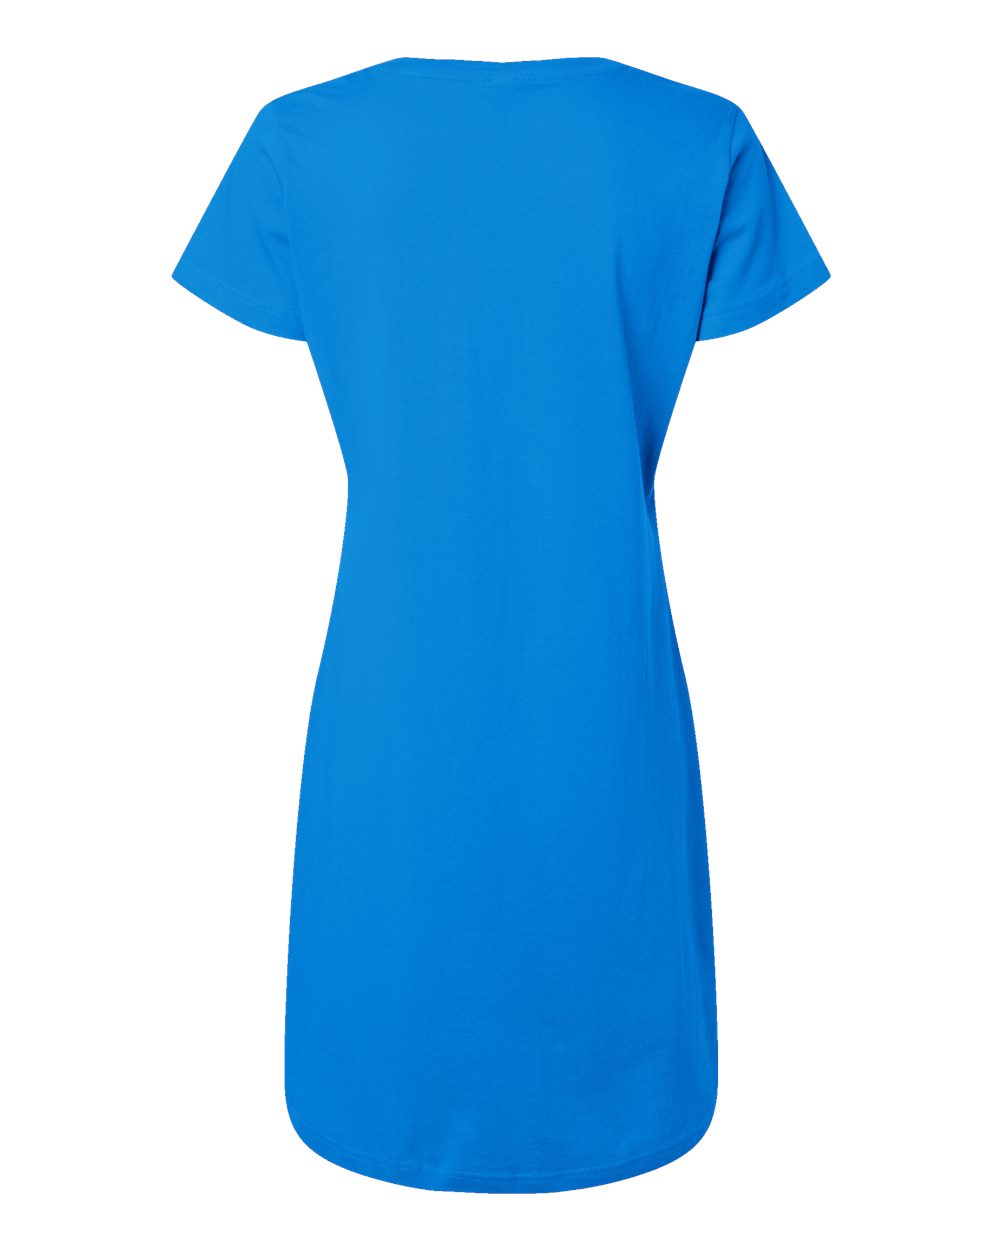 LAT - Women's Fine Jersey V-Neck Coverup - 3522 - Cobalt - Size: L/XL - image 3 of 5